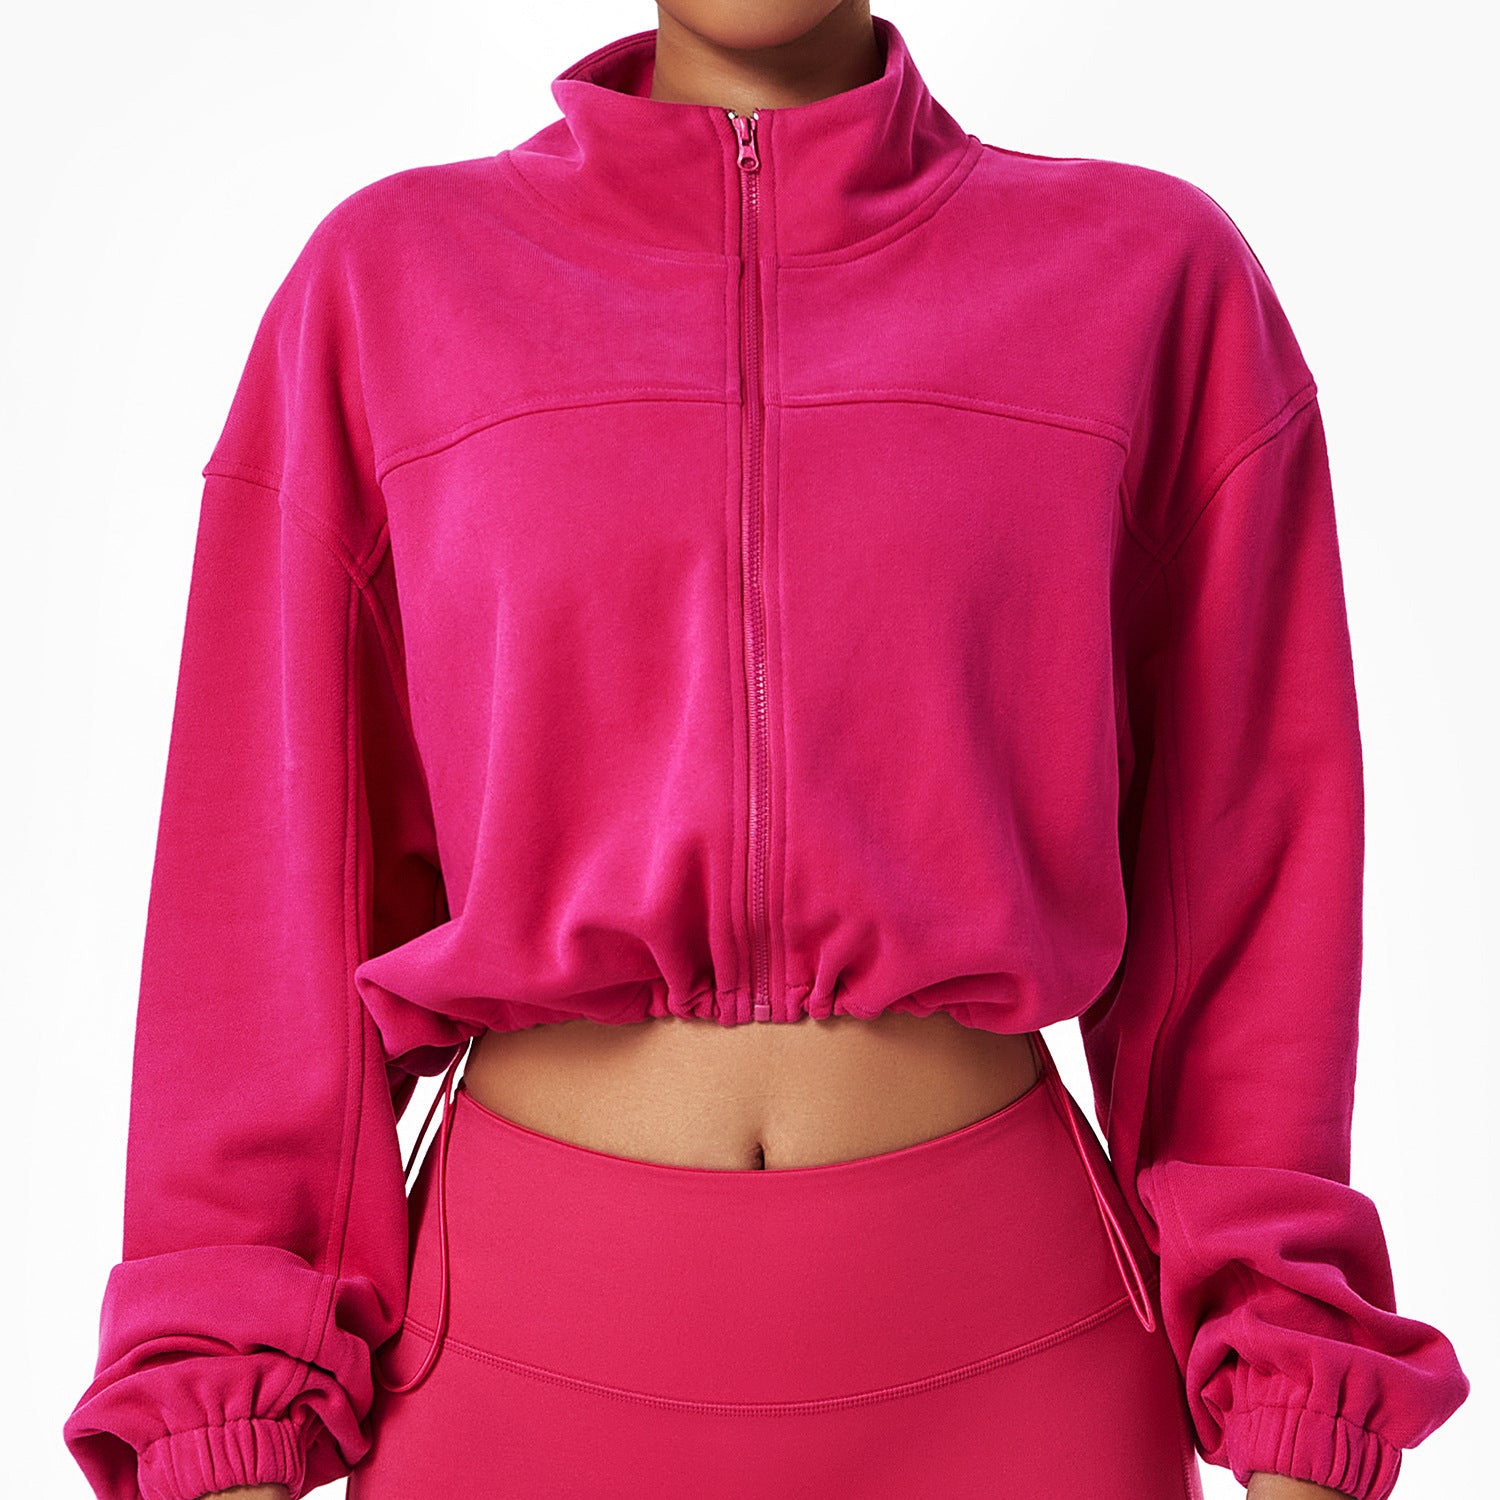 Loose Long Sleeve Casual Sports Sweater Versatile Top Outdoor Running Riding Training Zipper Coat Women's Sweater